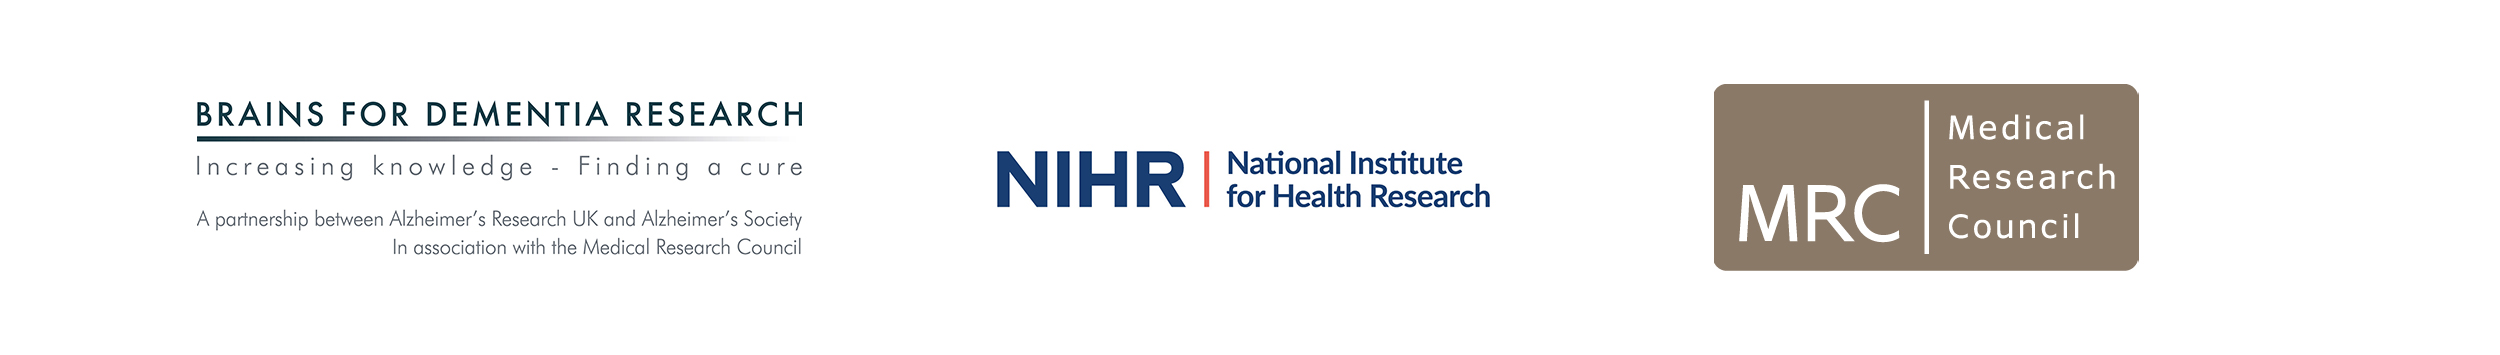 BDR, NIHR and MRC logos